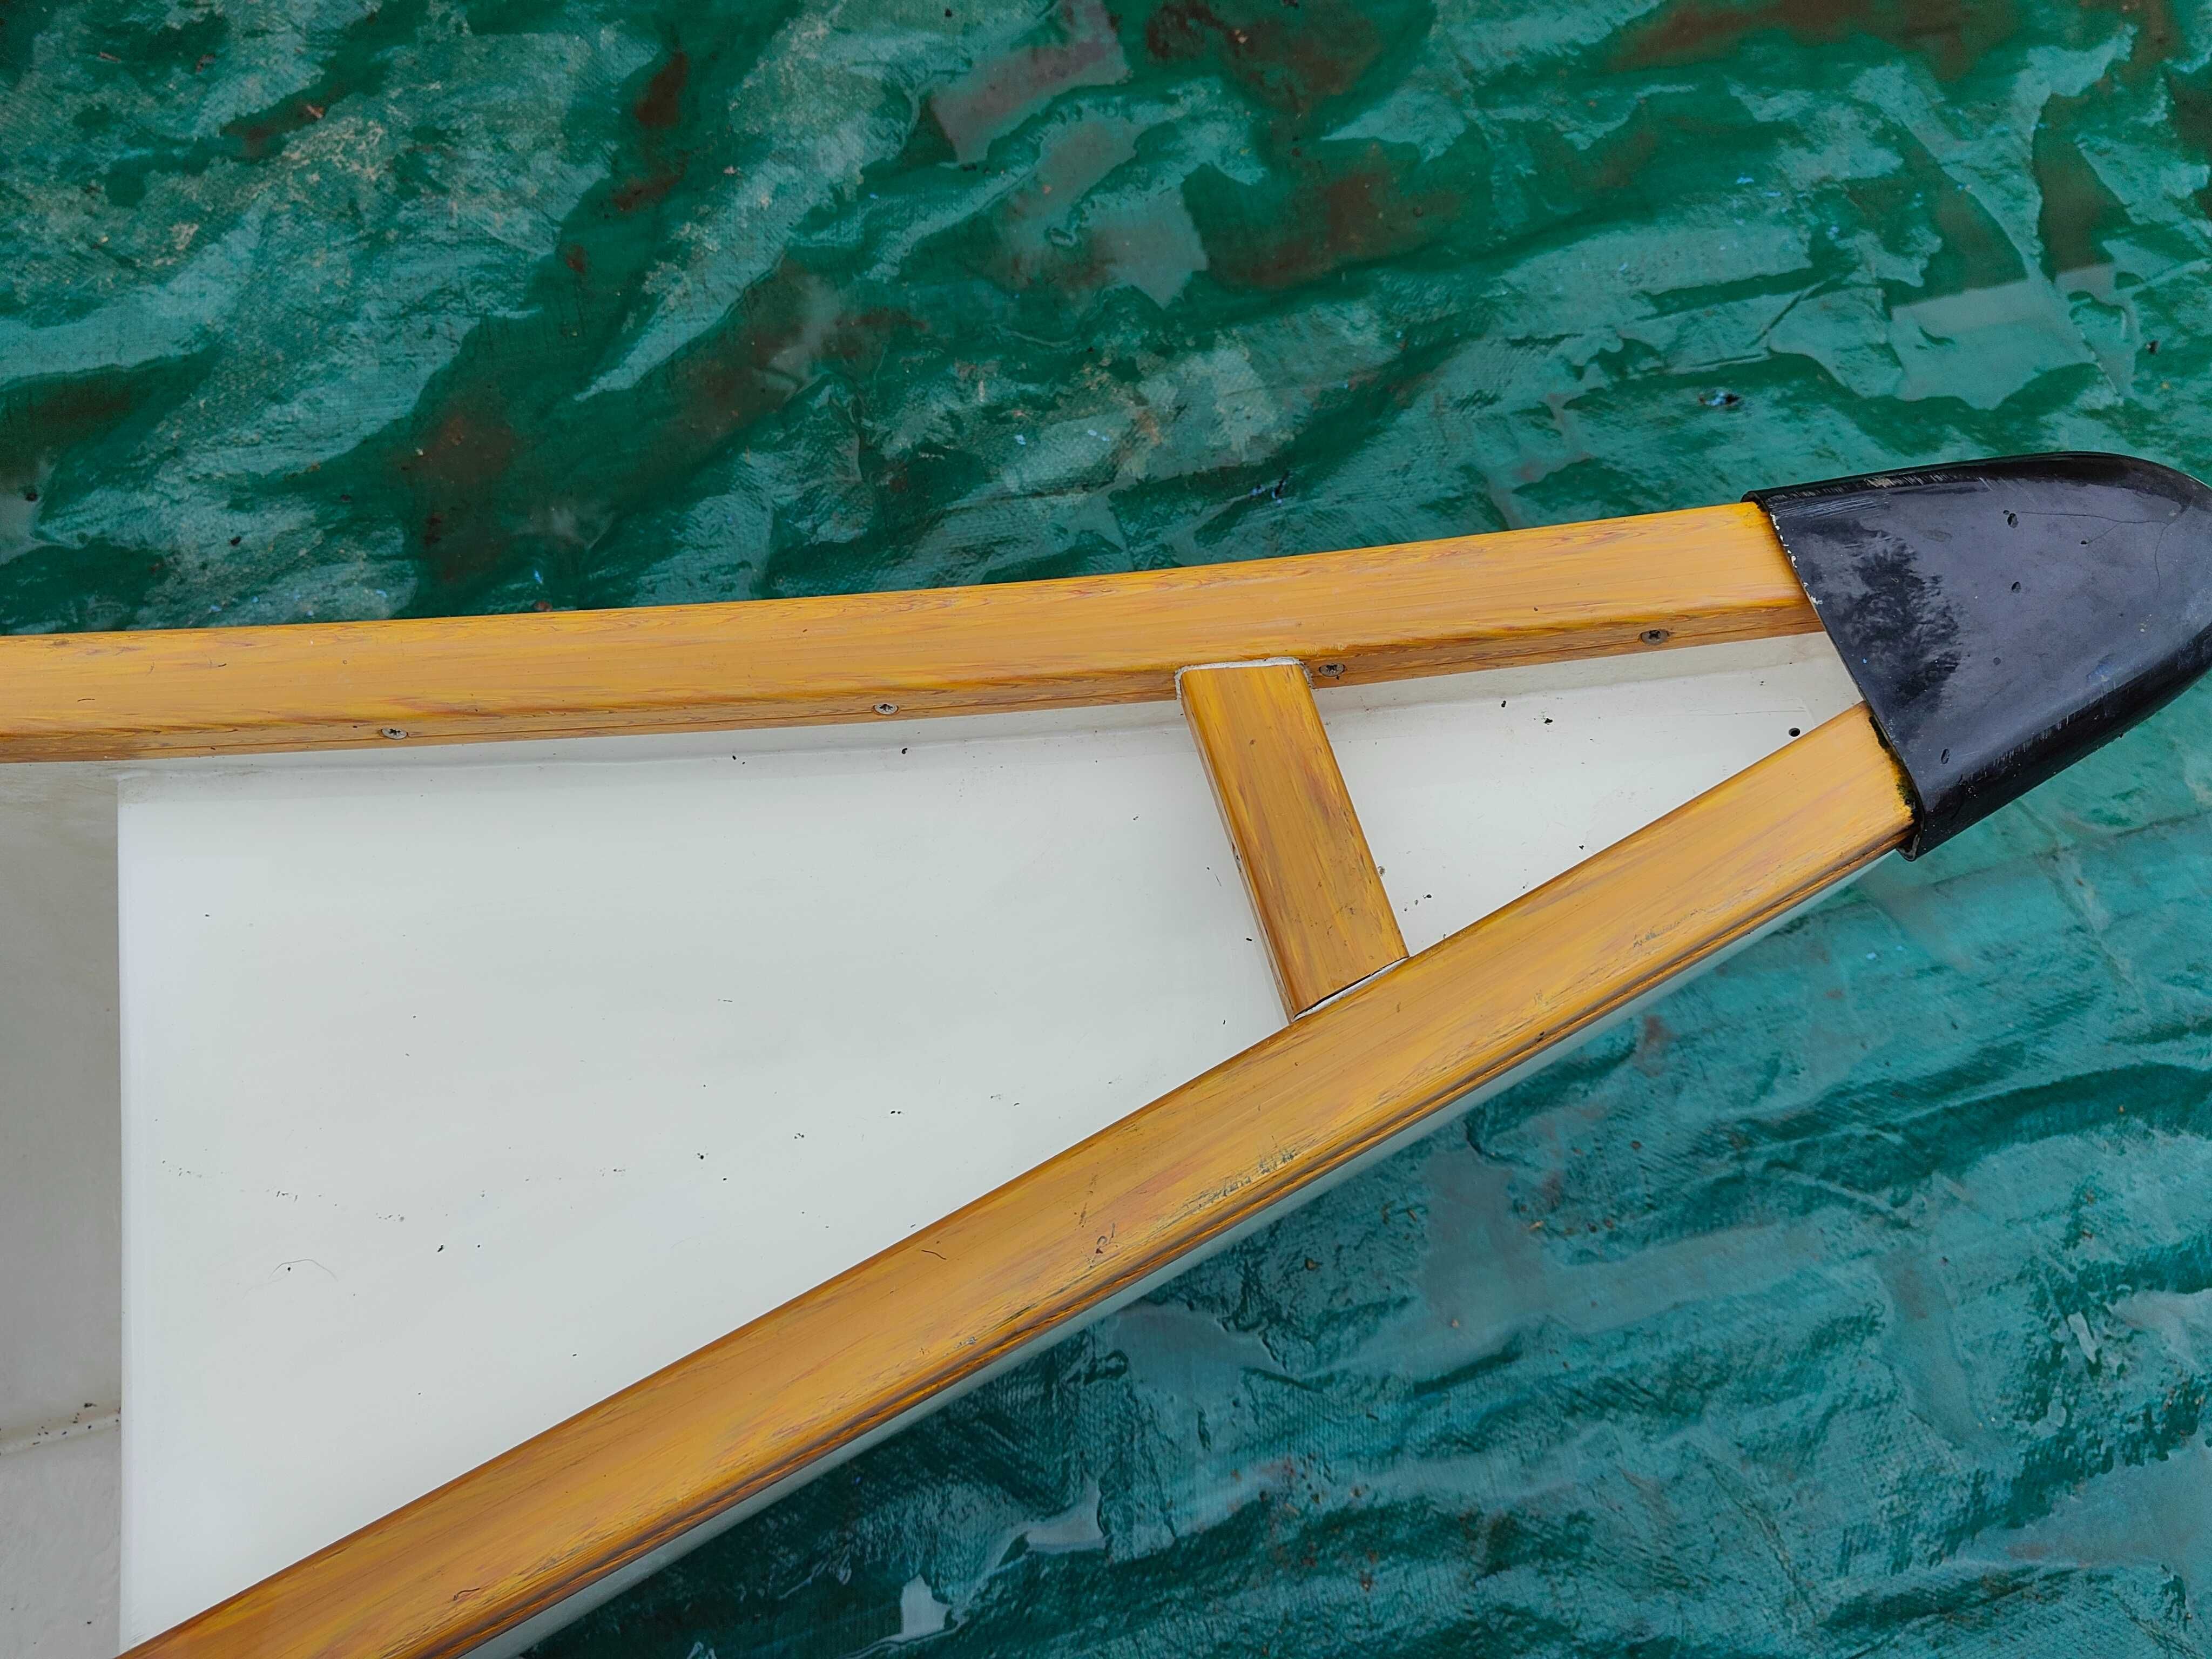 Kanadyjka kanu kajak łódka